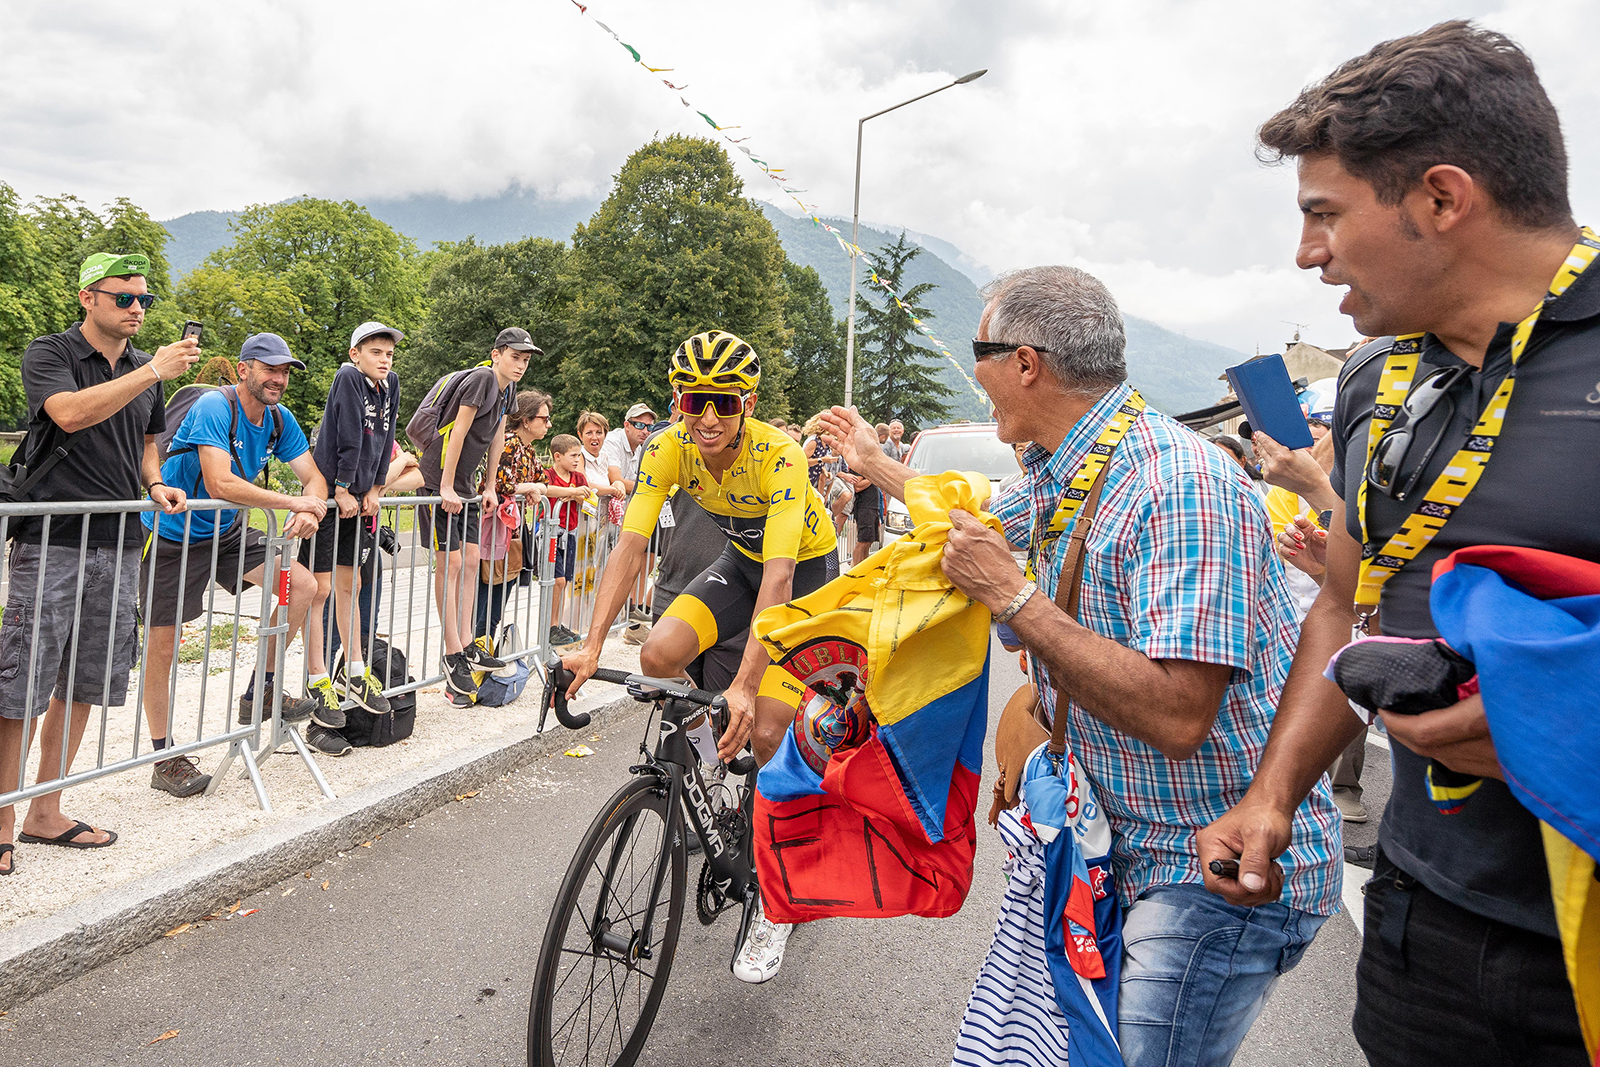 Egan Bernal, Tour de France Champion 2019